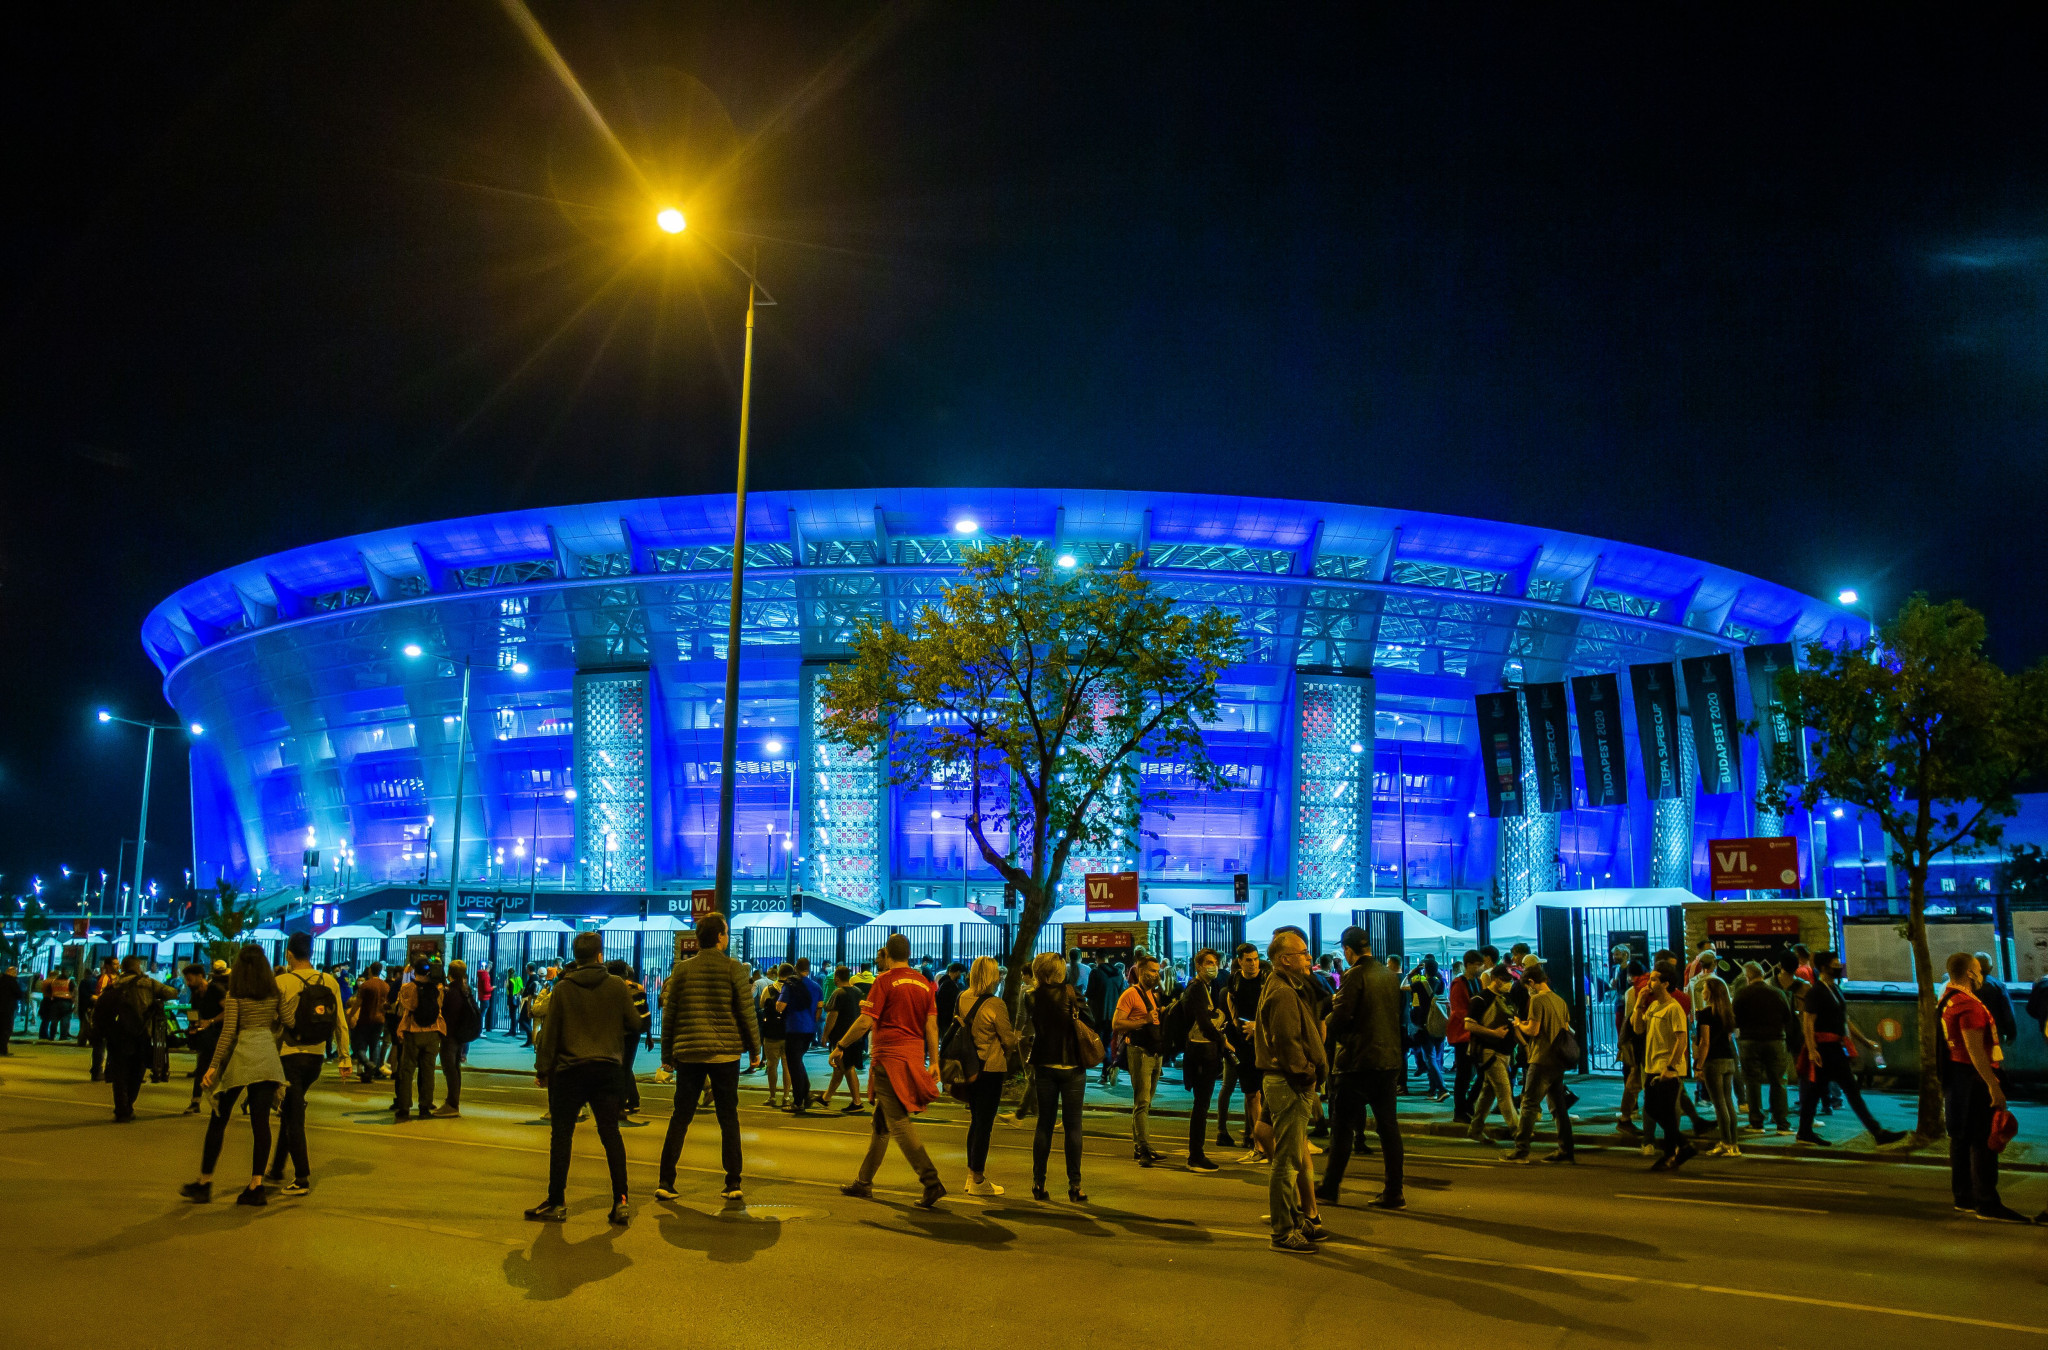 Budapest's Puskás Aréna will be full to capacity at Euro 2020 despite the coronavirus crisis, UEFA says ©Getty Images